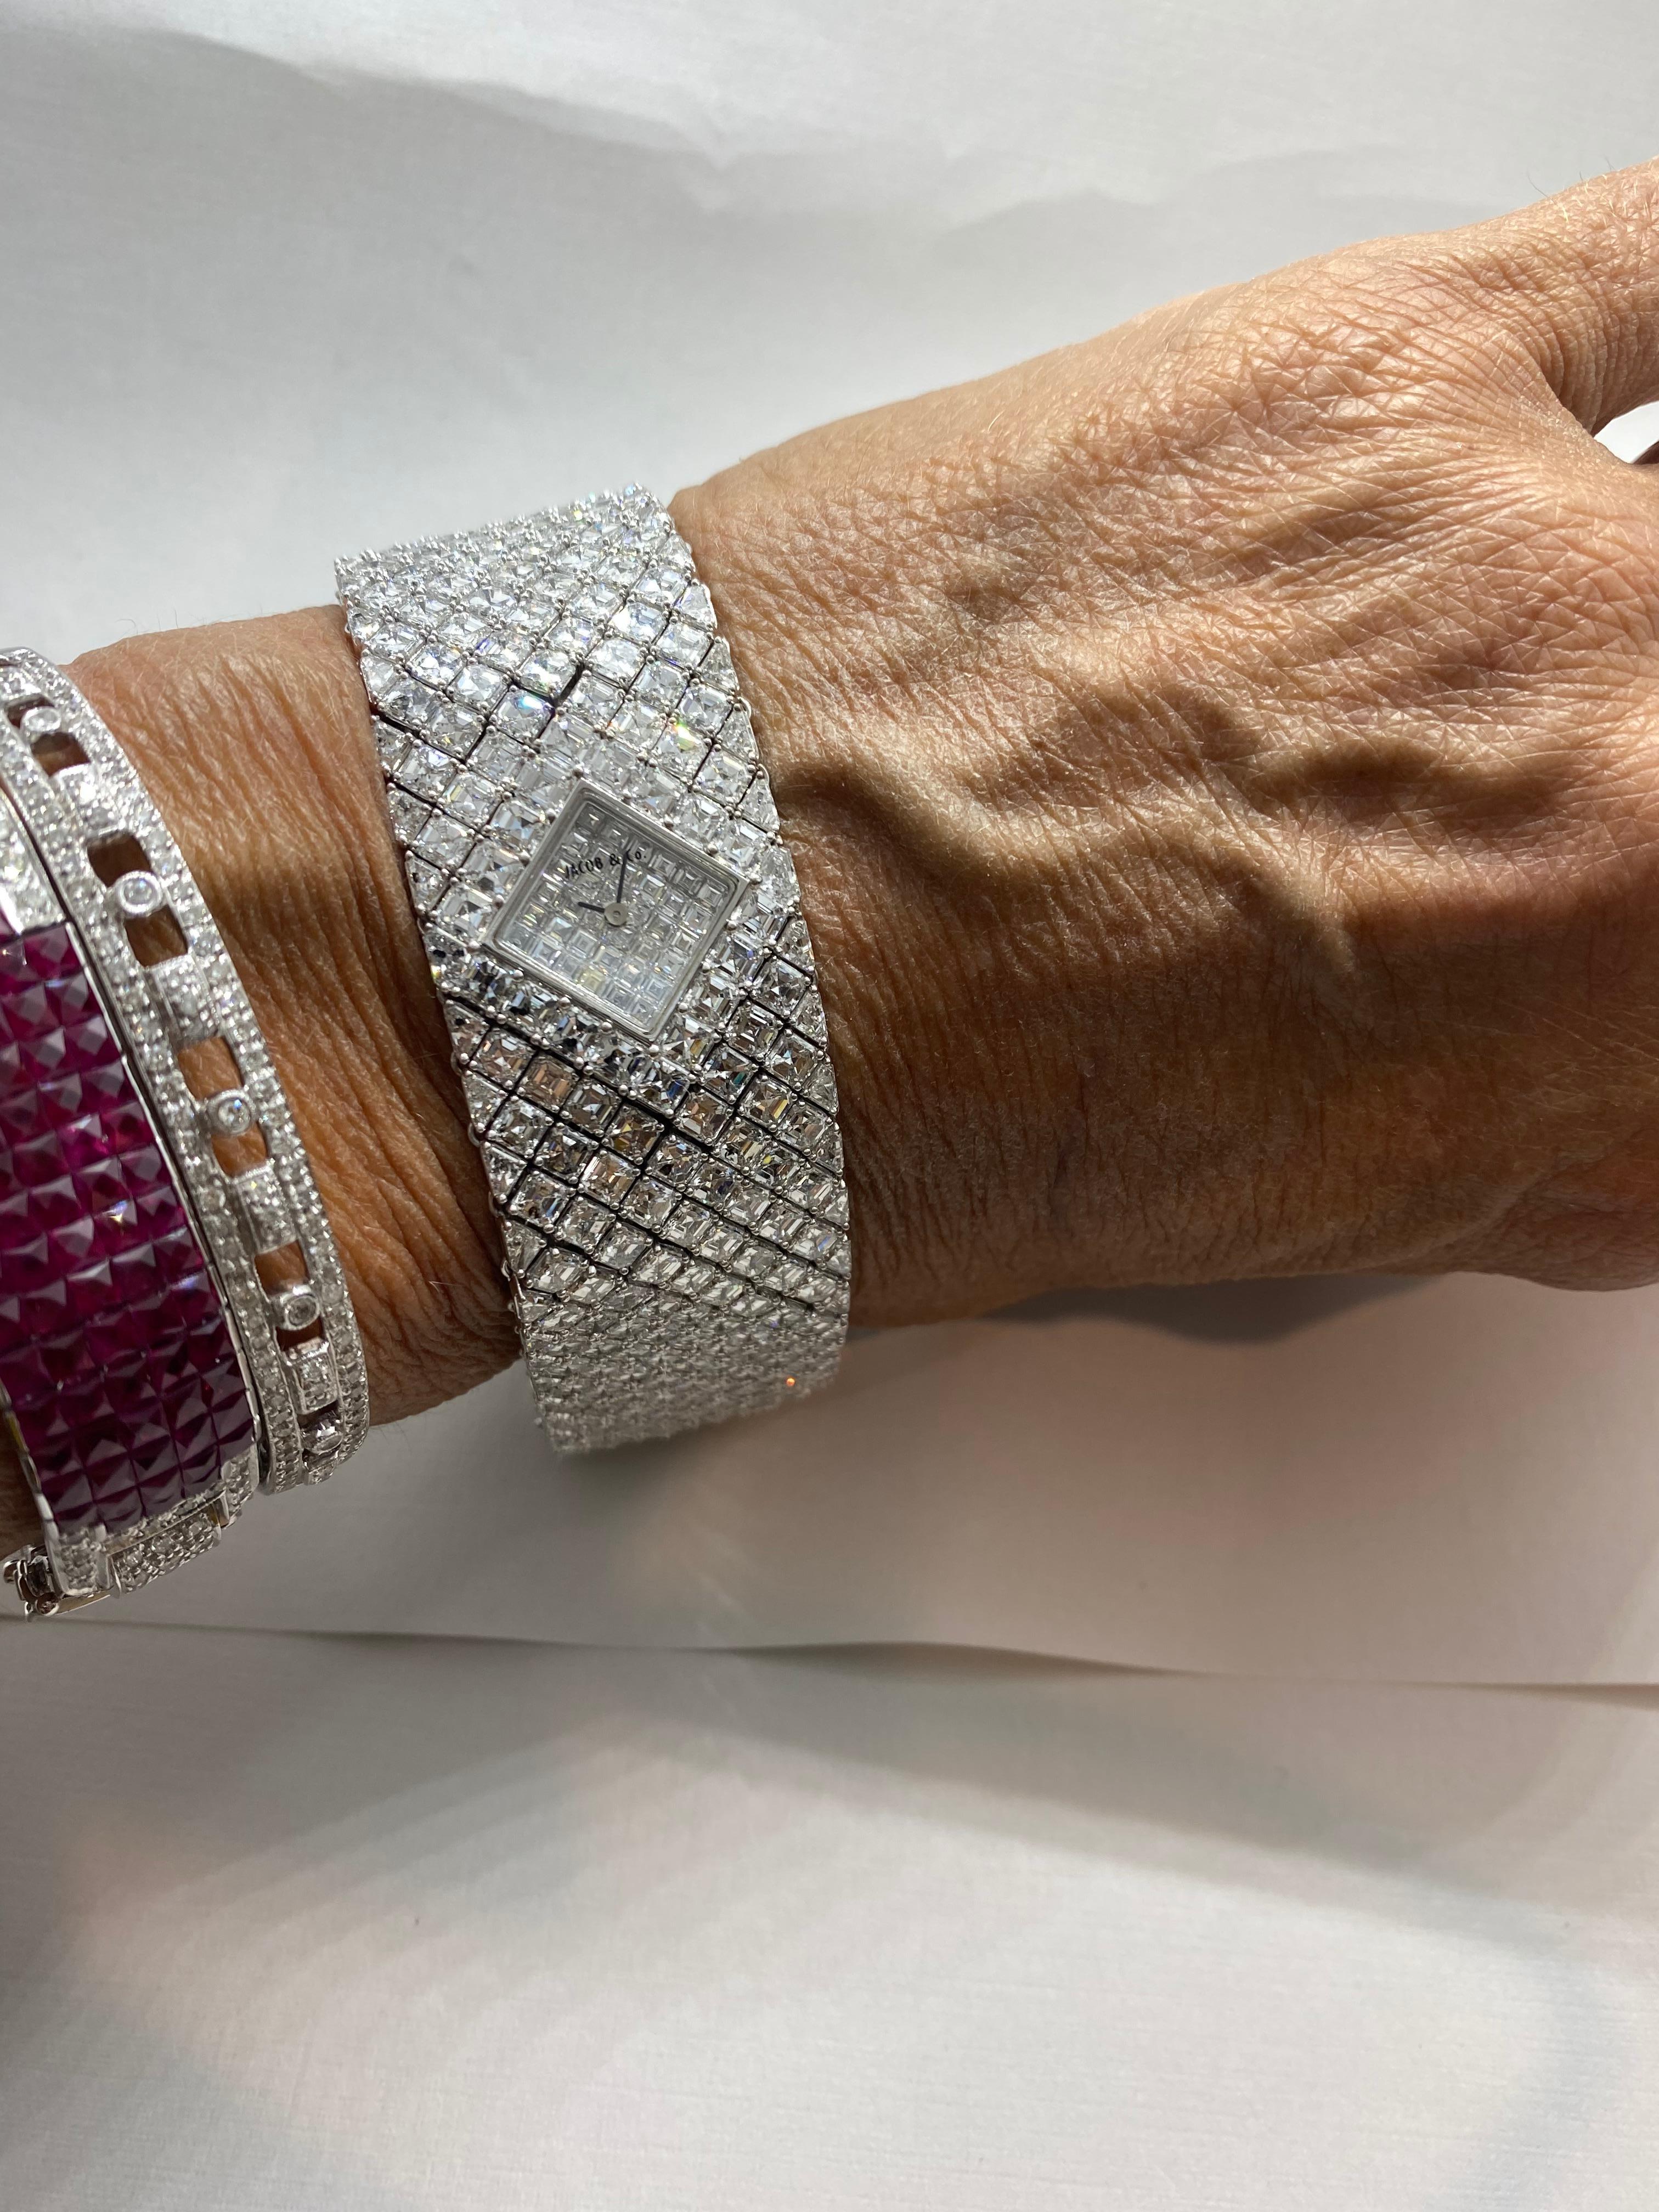 Asscher Cut Jacob & Co Infinity Diamond Ladies Watch 50 Carat VS1 E-F Endless Bracelet